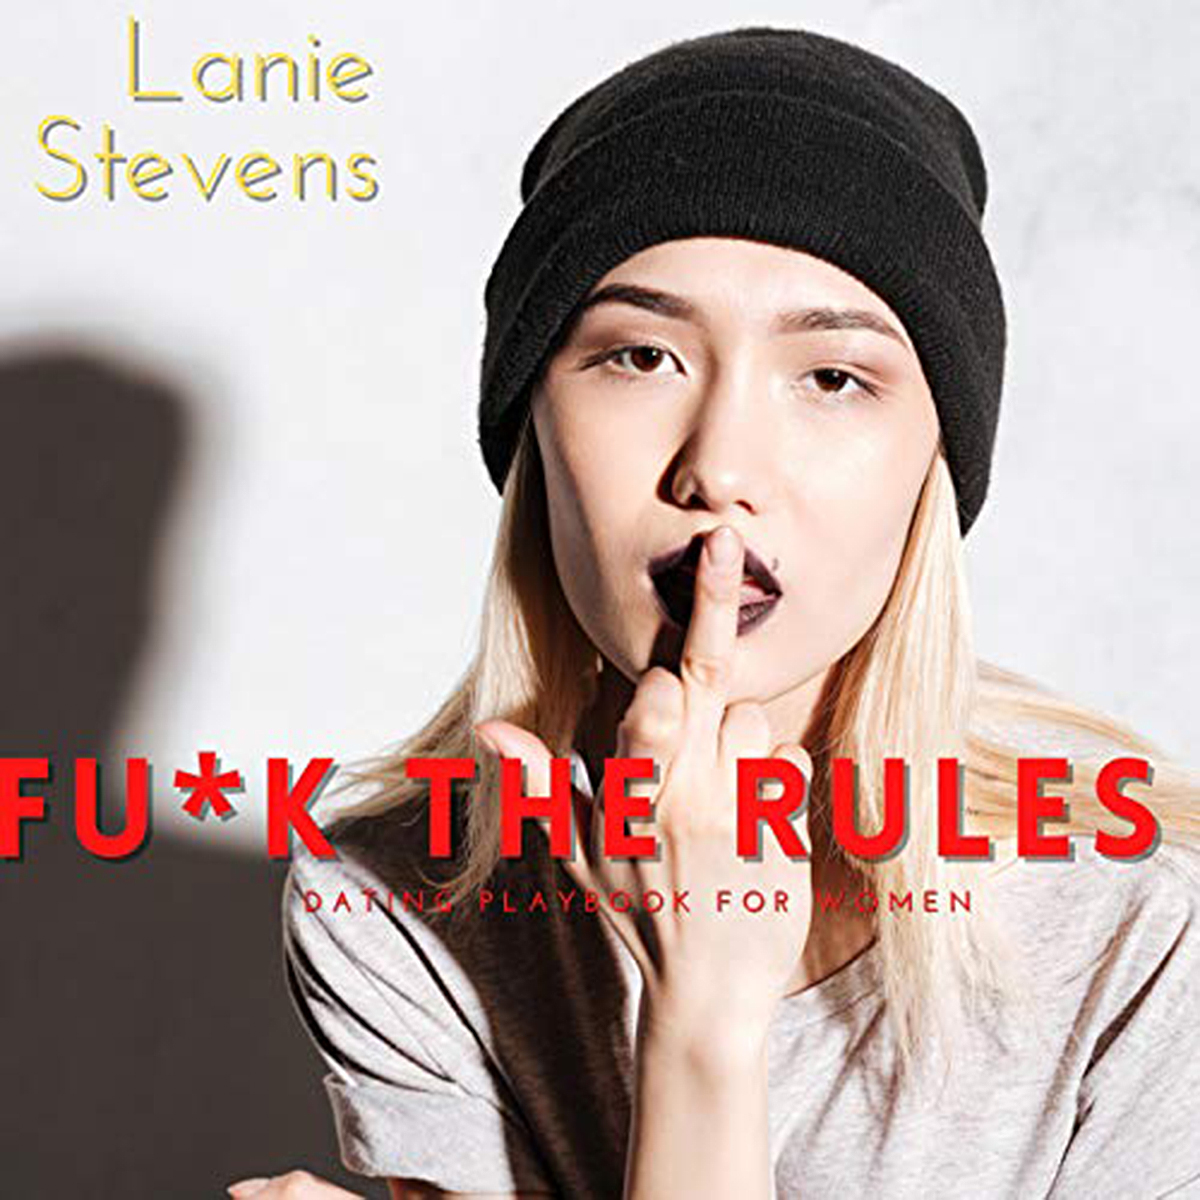 Lanie Stevens